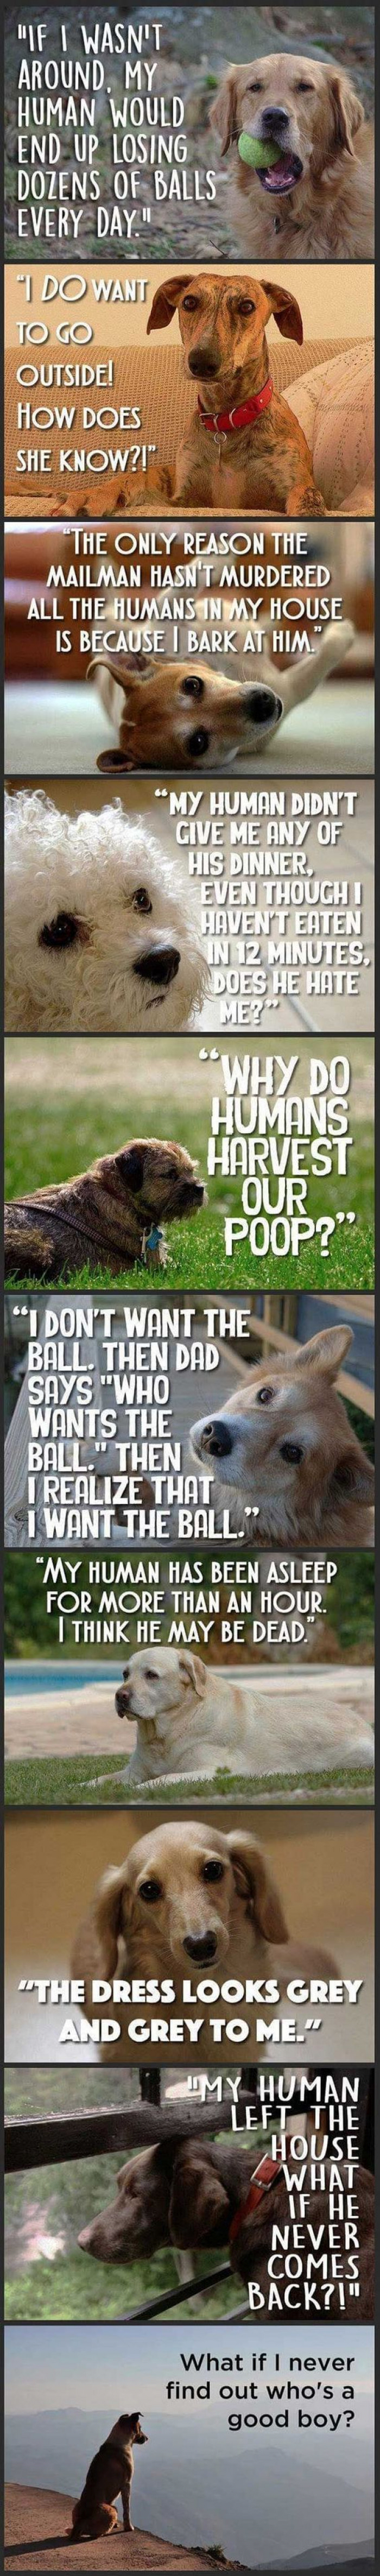 Dog Logic